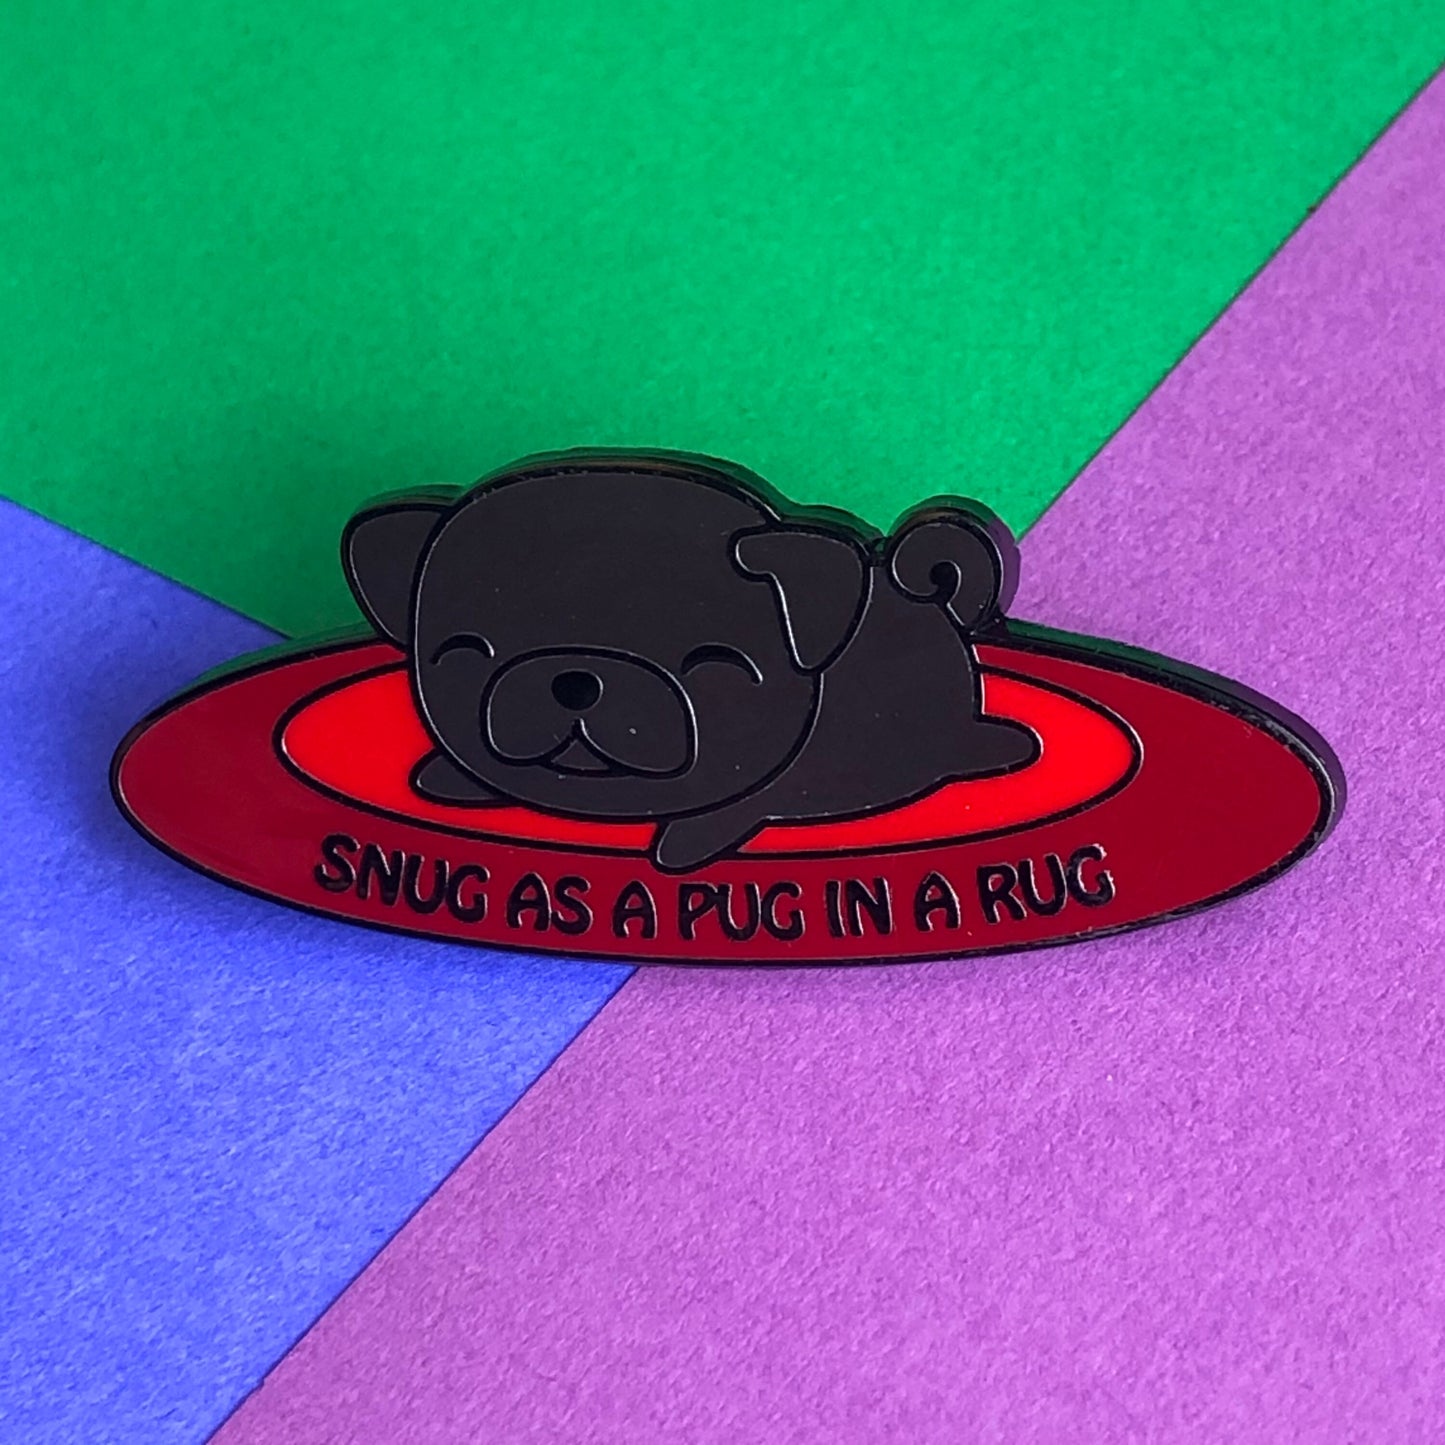 Snug as a pug in a rug enamel pin, pug pin, cute cartoon pug, sleeping pug, happy pug pin